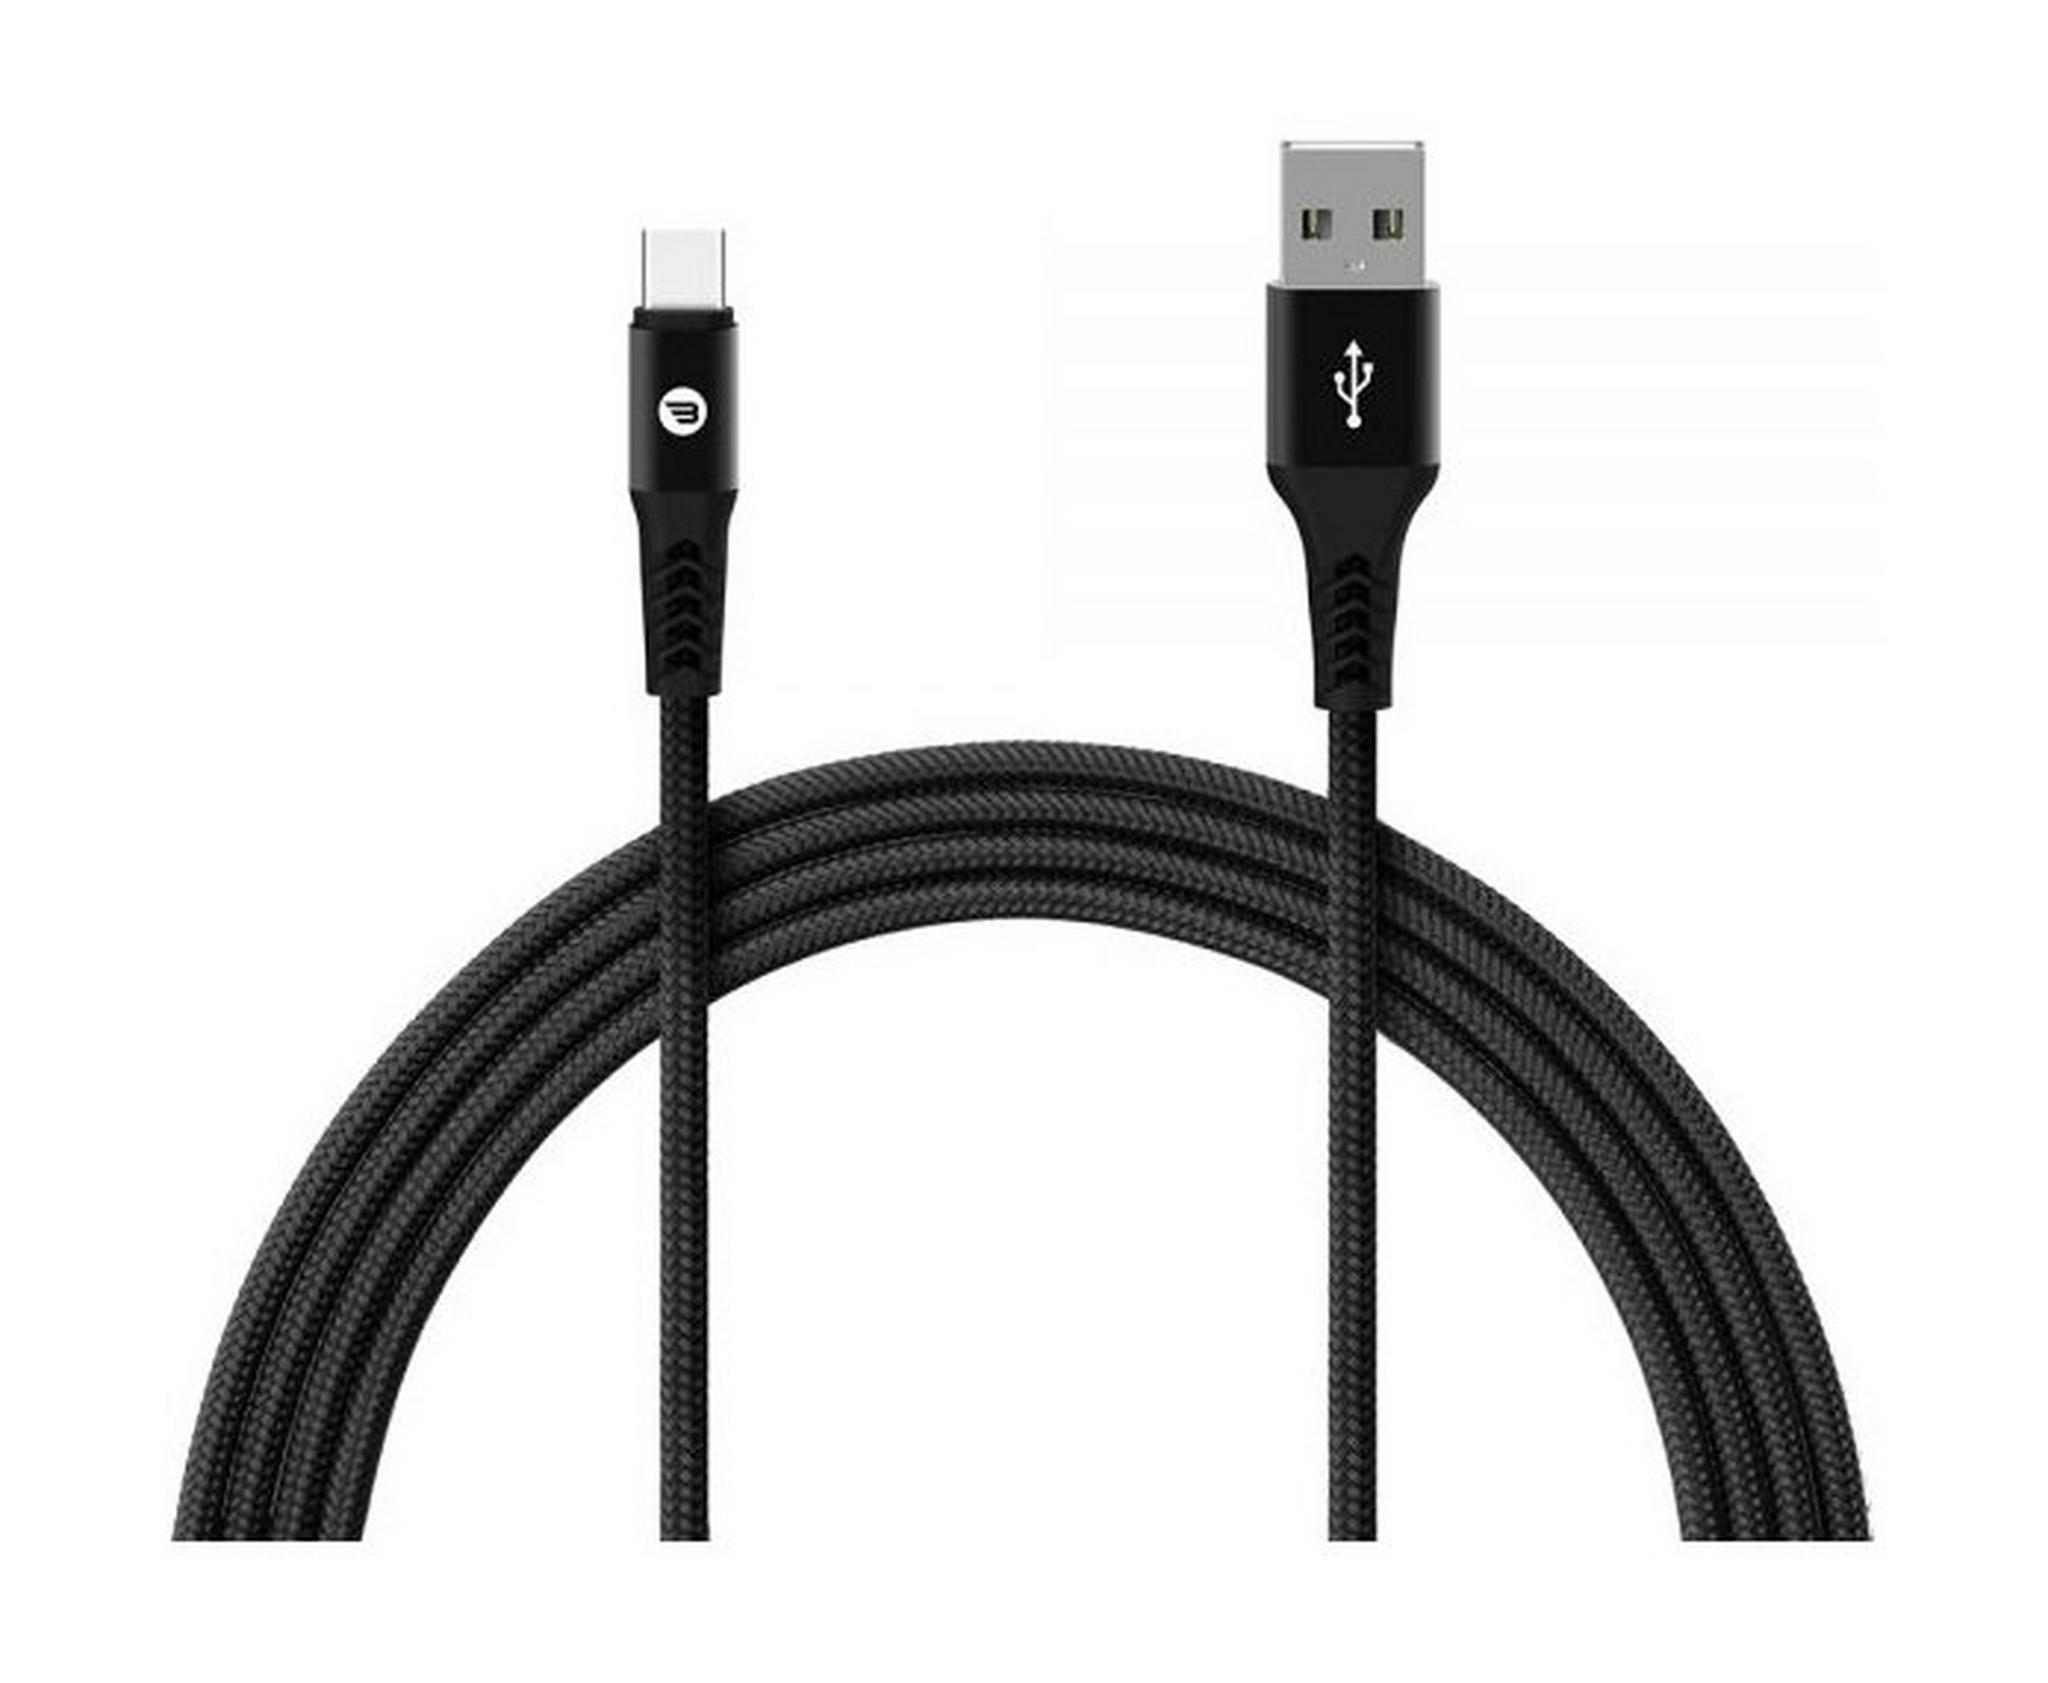 Baykron 1.2 USB Type-C Cable - Black